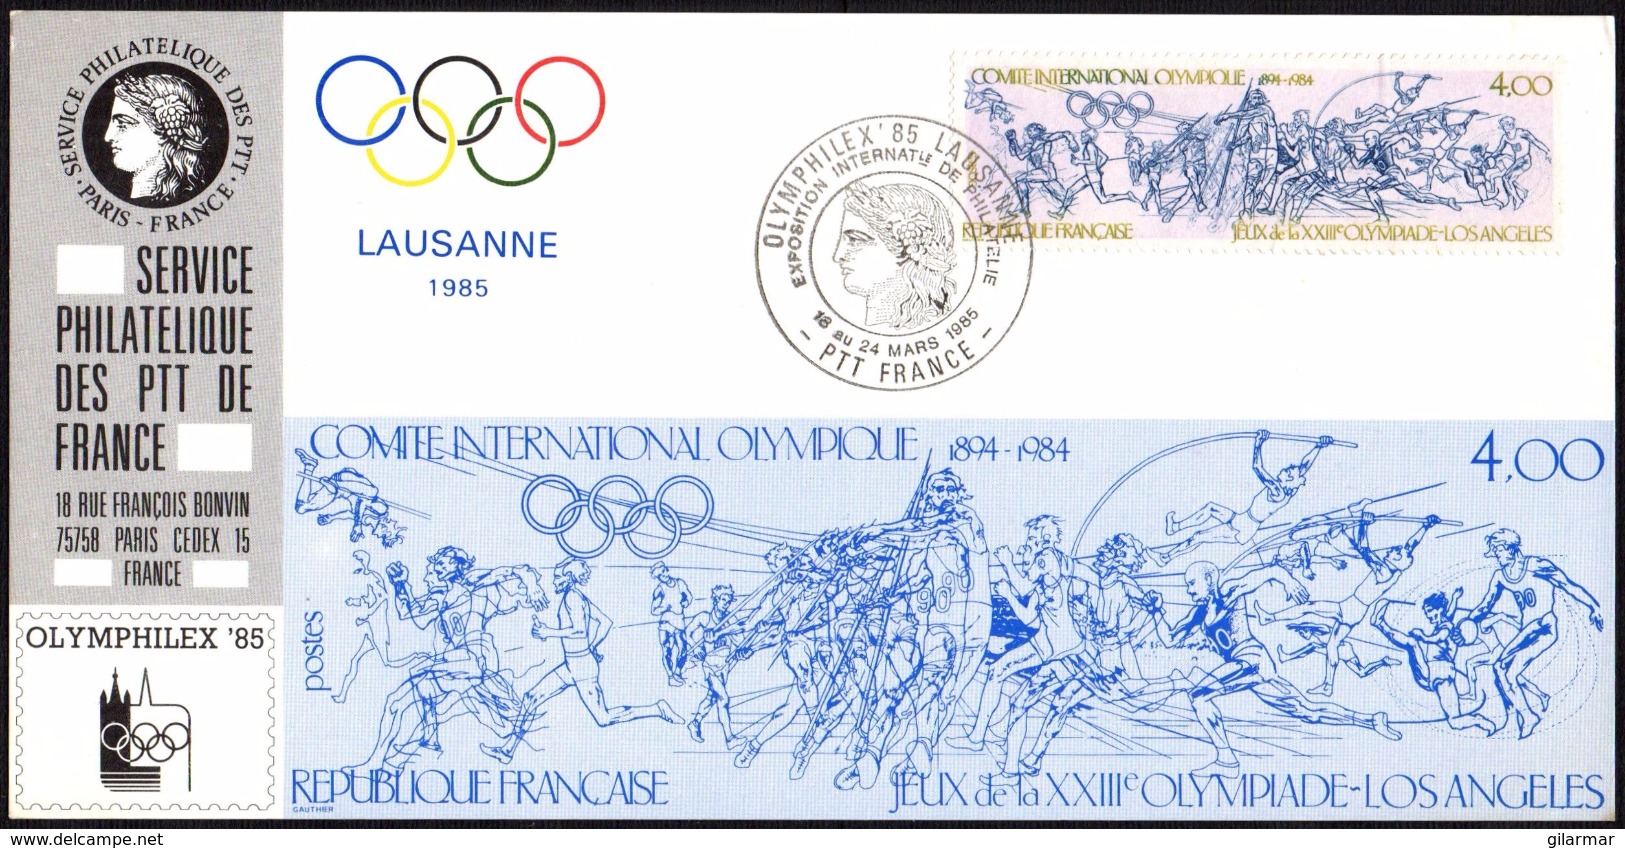 FRANCE LAUSANNE 1985 - WORLD SPORT OLYMPIC PHILATELIC EXHIBITION "OLYMPHILEX '85" - OFFICIAL CARD - Estate 1988: Seul